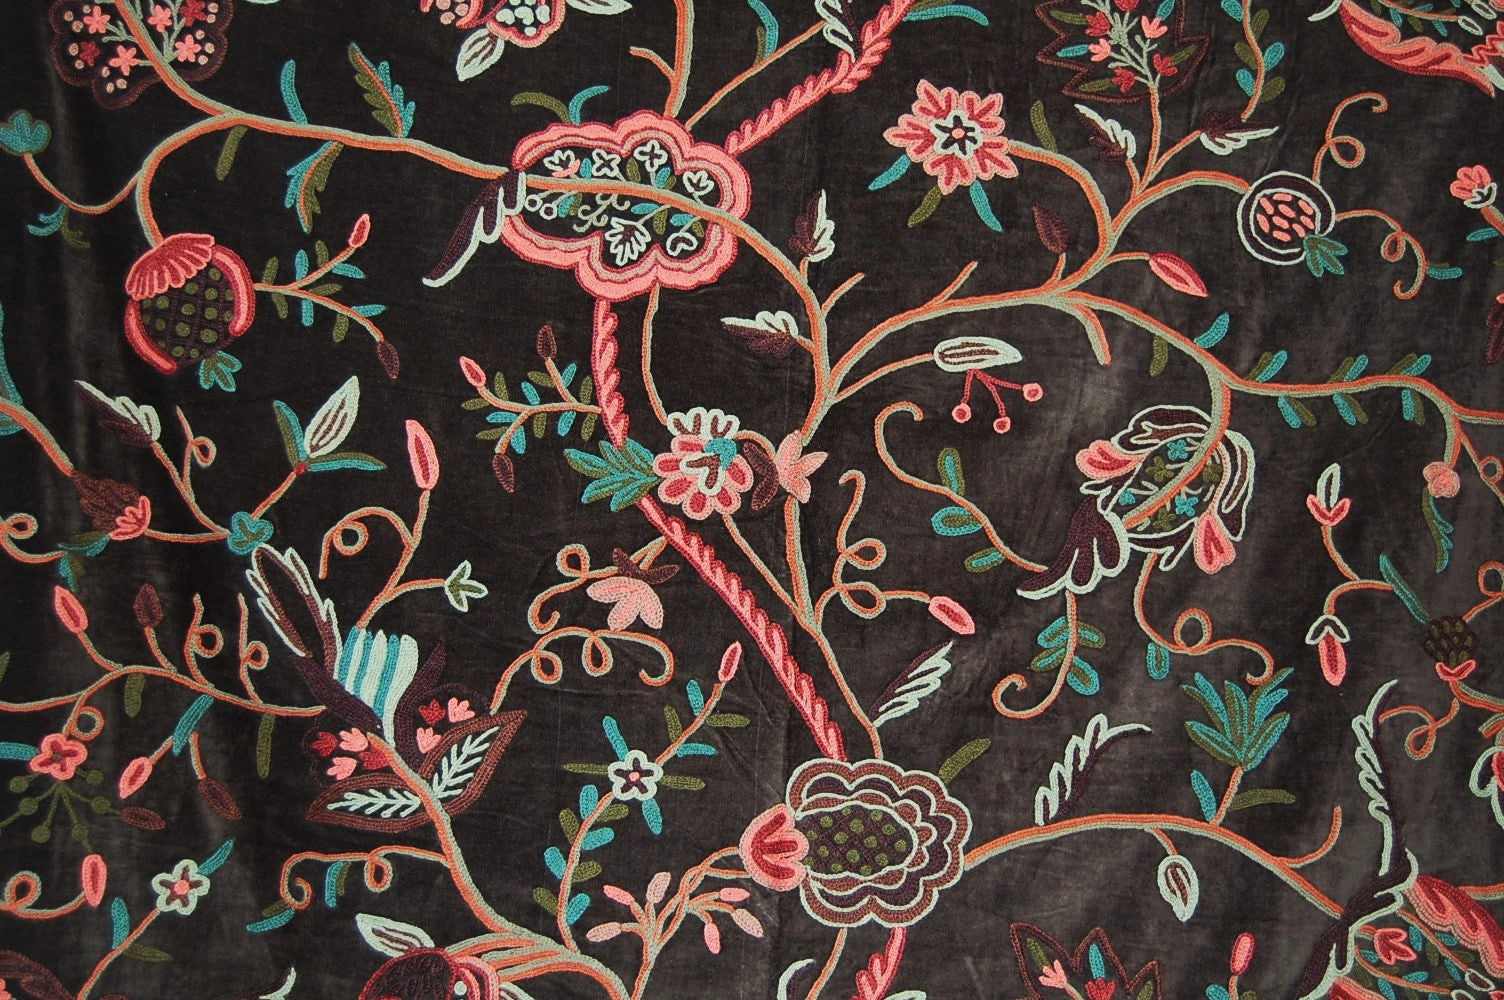 Kashmir Crewel Chenille Velvet Crewel Fabric Dark Brown, Multicolor Embroidery #CV302